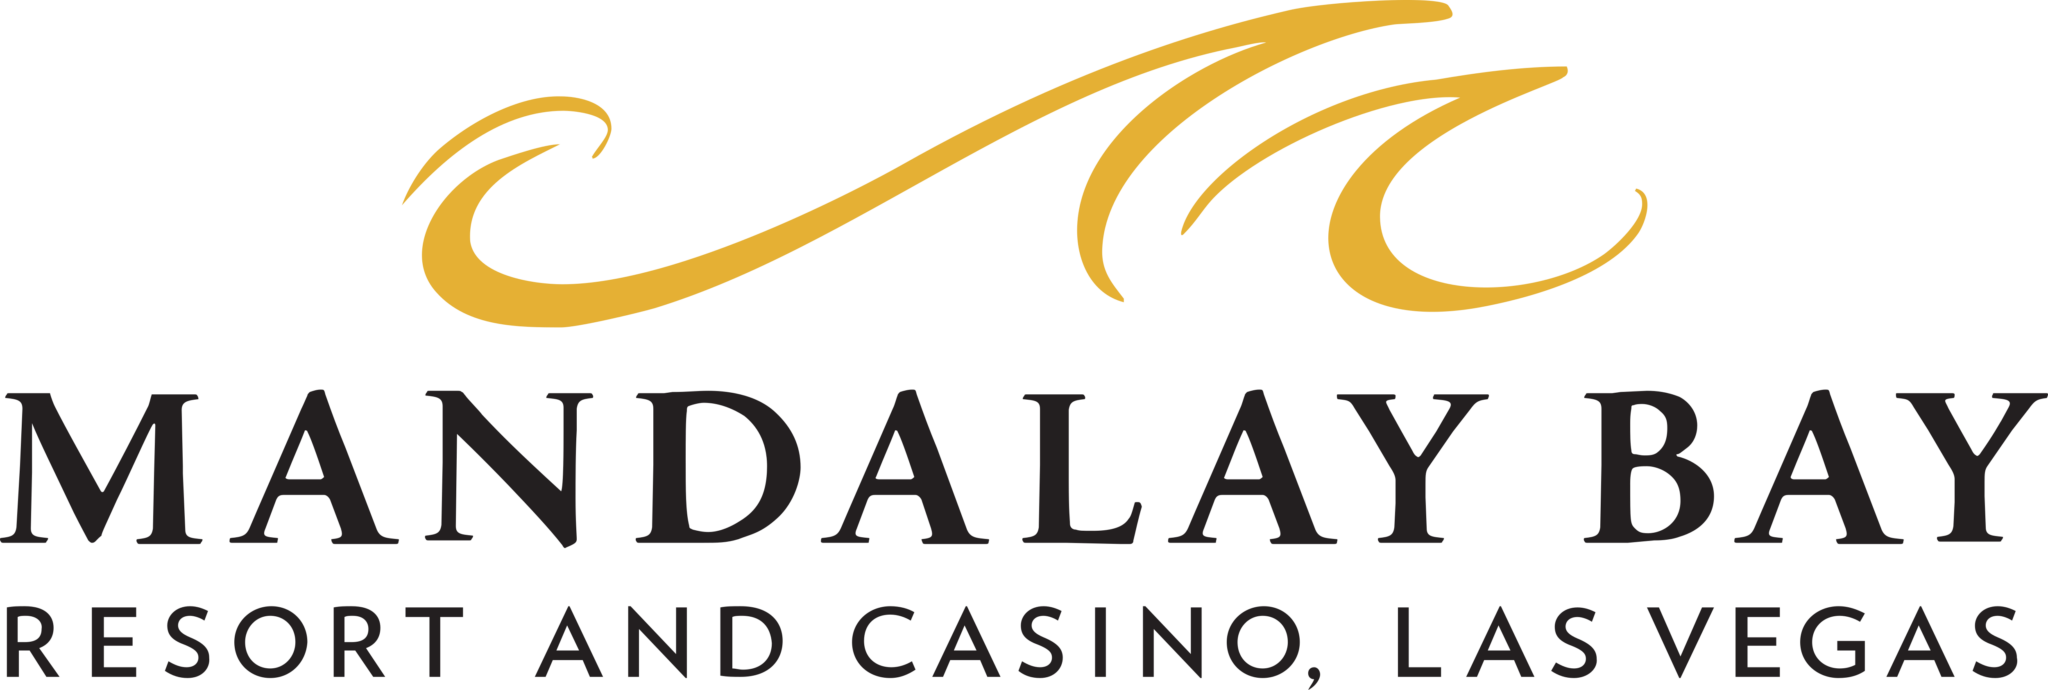 Mandalay Bay Resort and Casino Logos Download